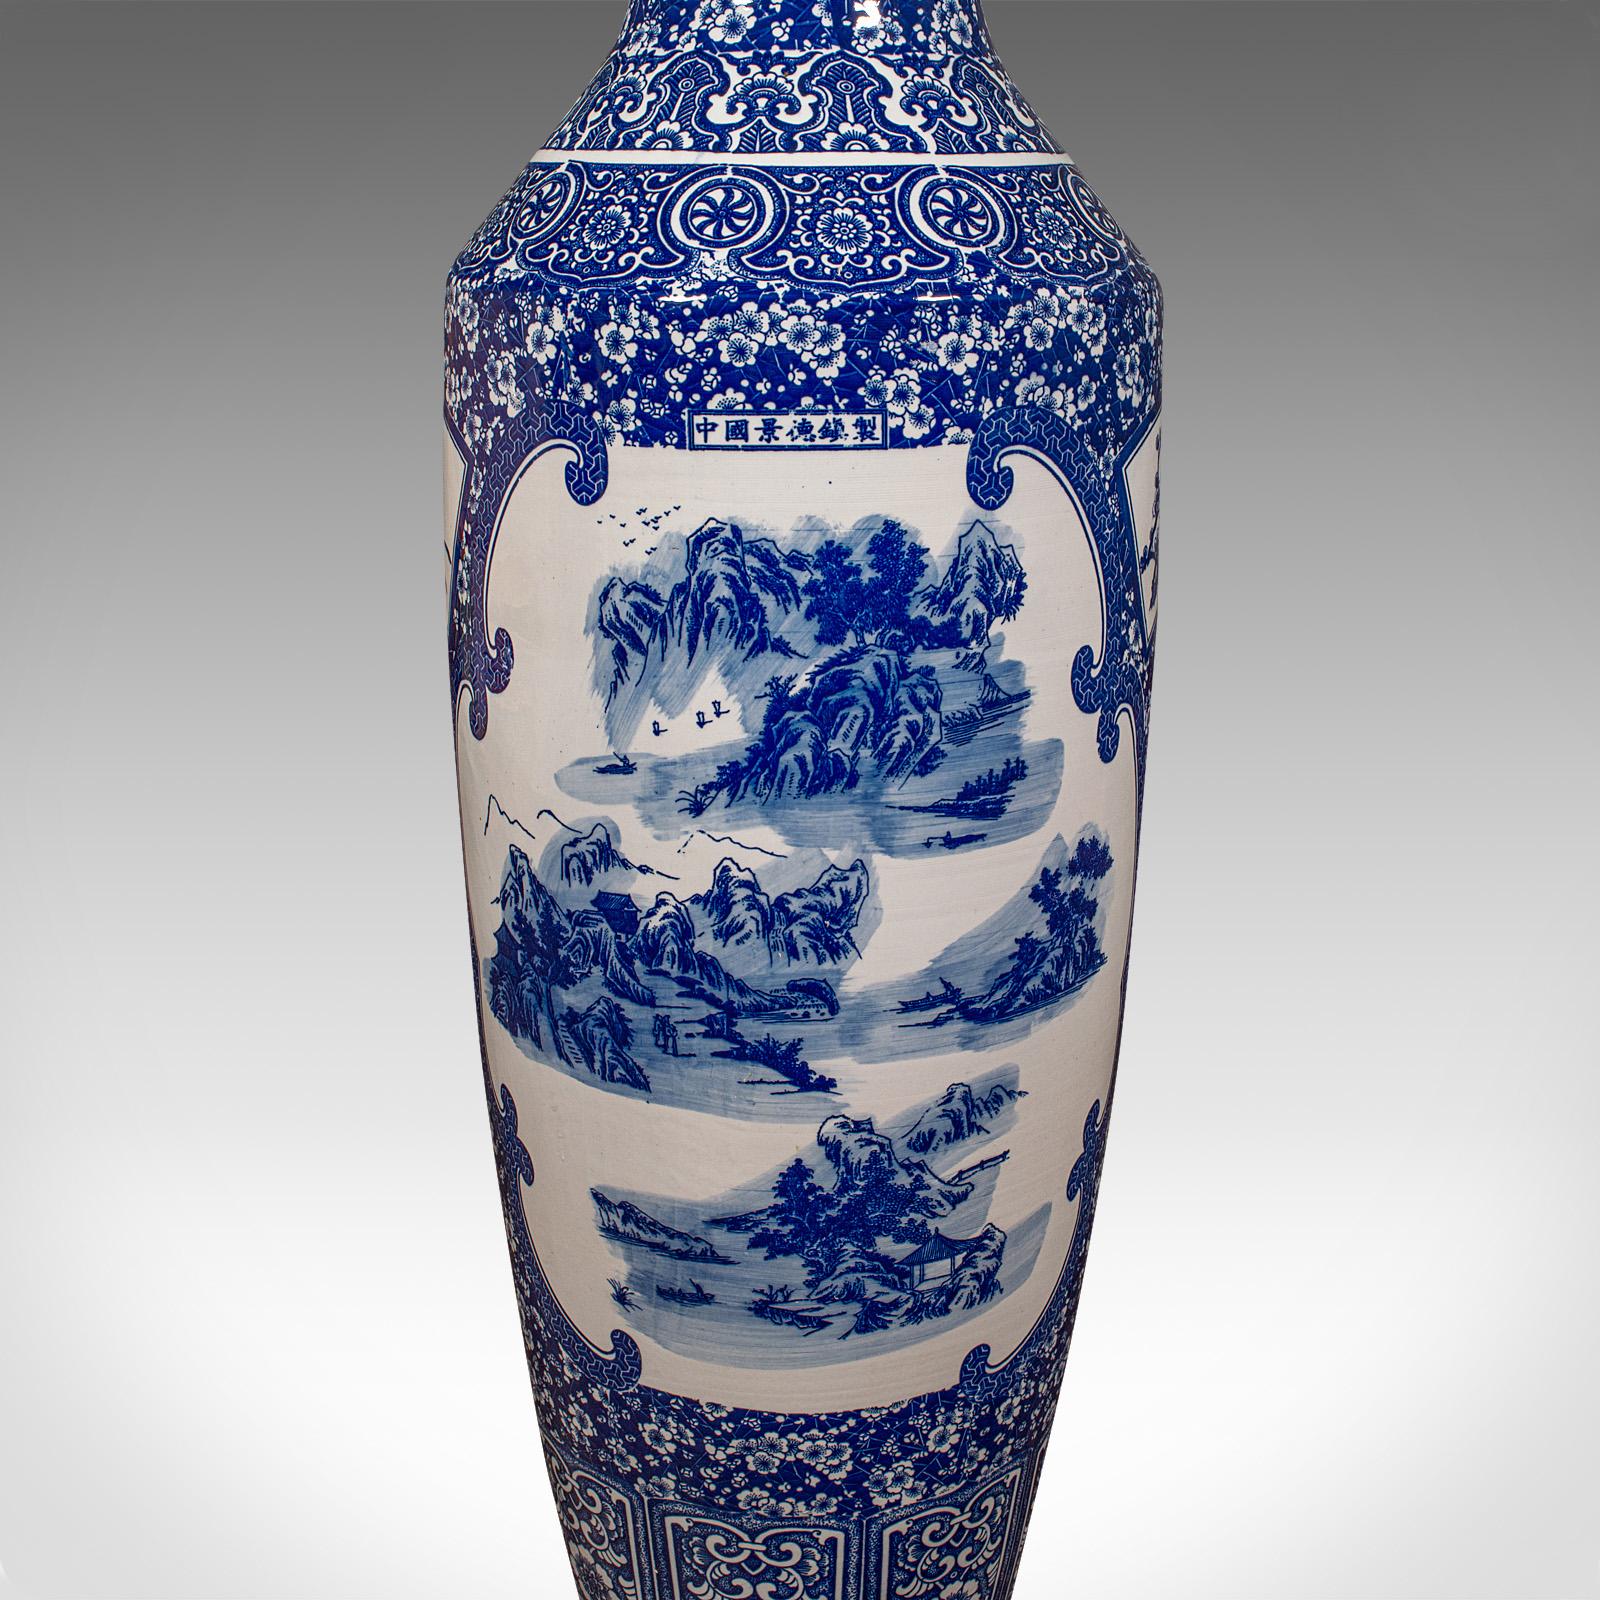 4' Tall Vintage Floor Vase, Chinese, Blue & White, Ceramic, Display, Art Deco For Sale 4